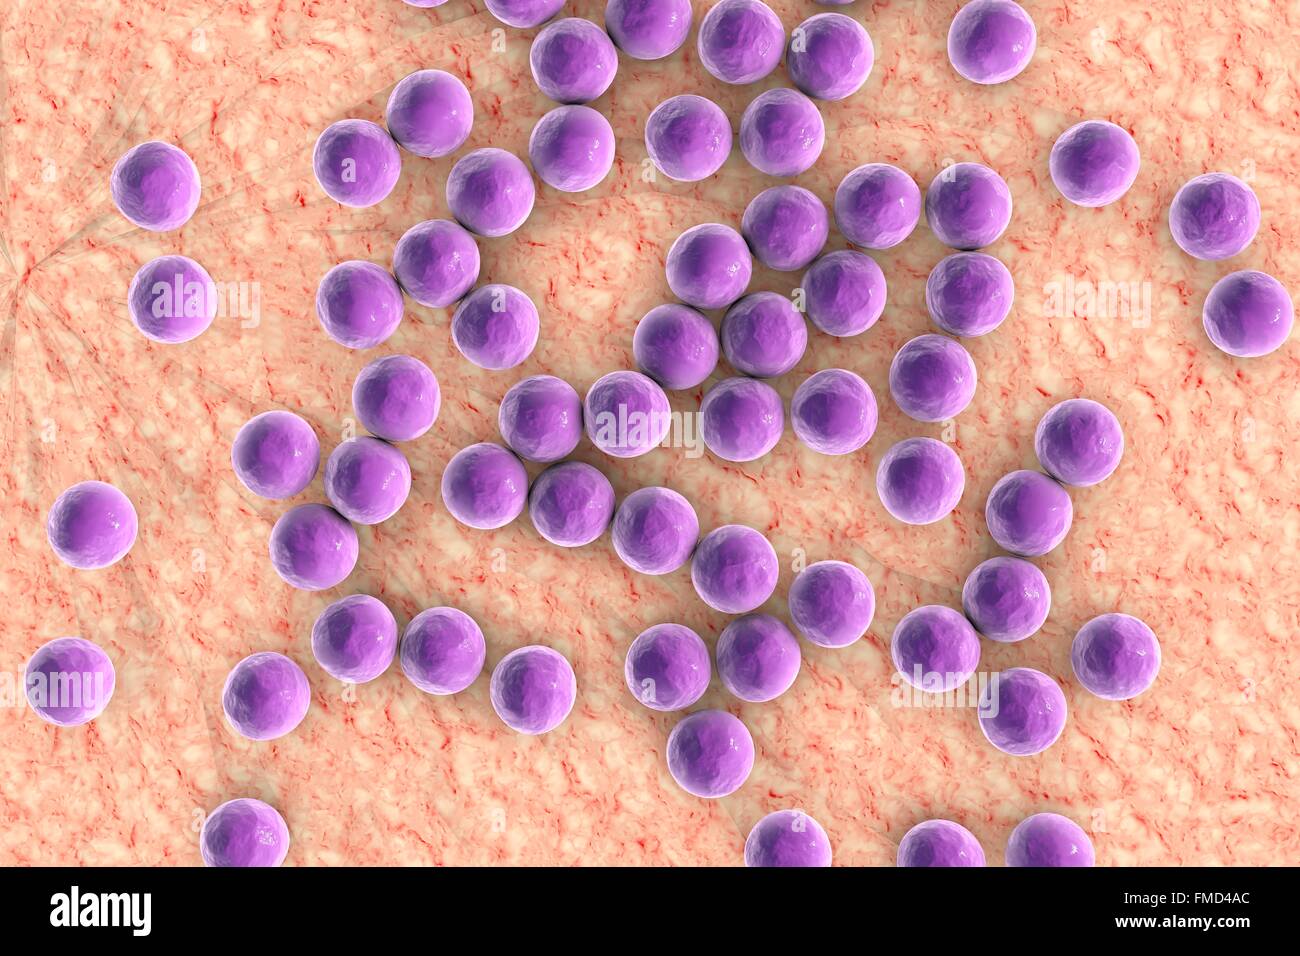 Computer-Darstellung der Staphylokokken-Bakterien (Staphylococcus Aureus). Stockfoto